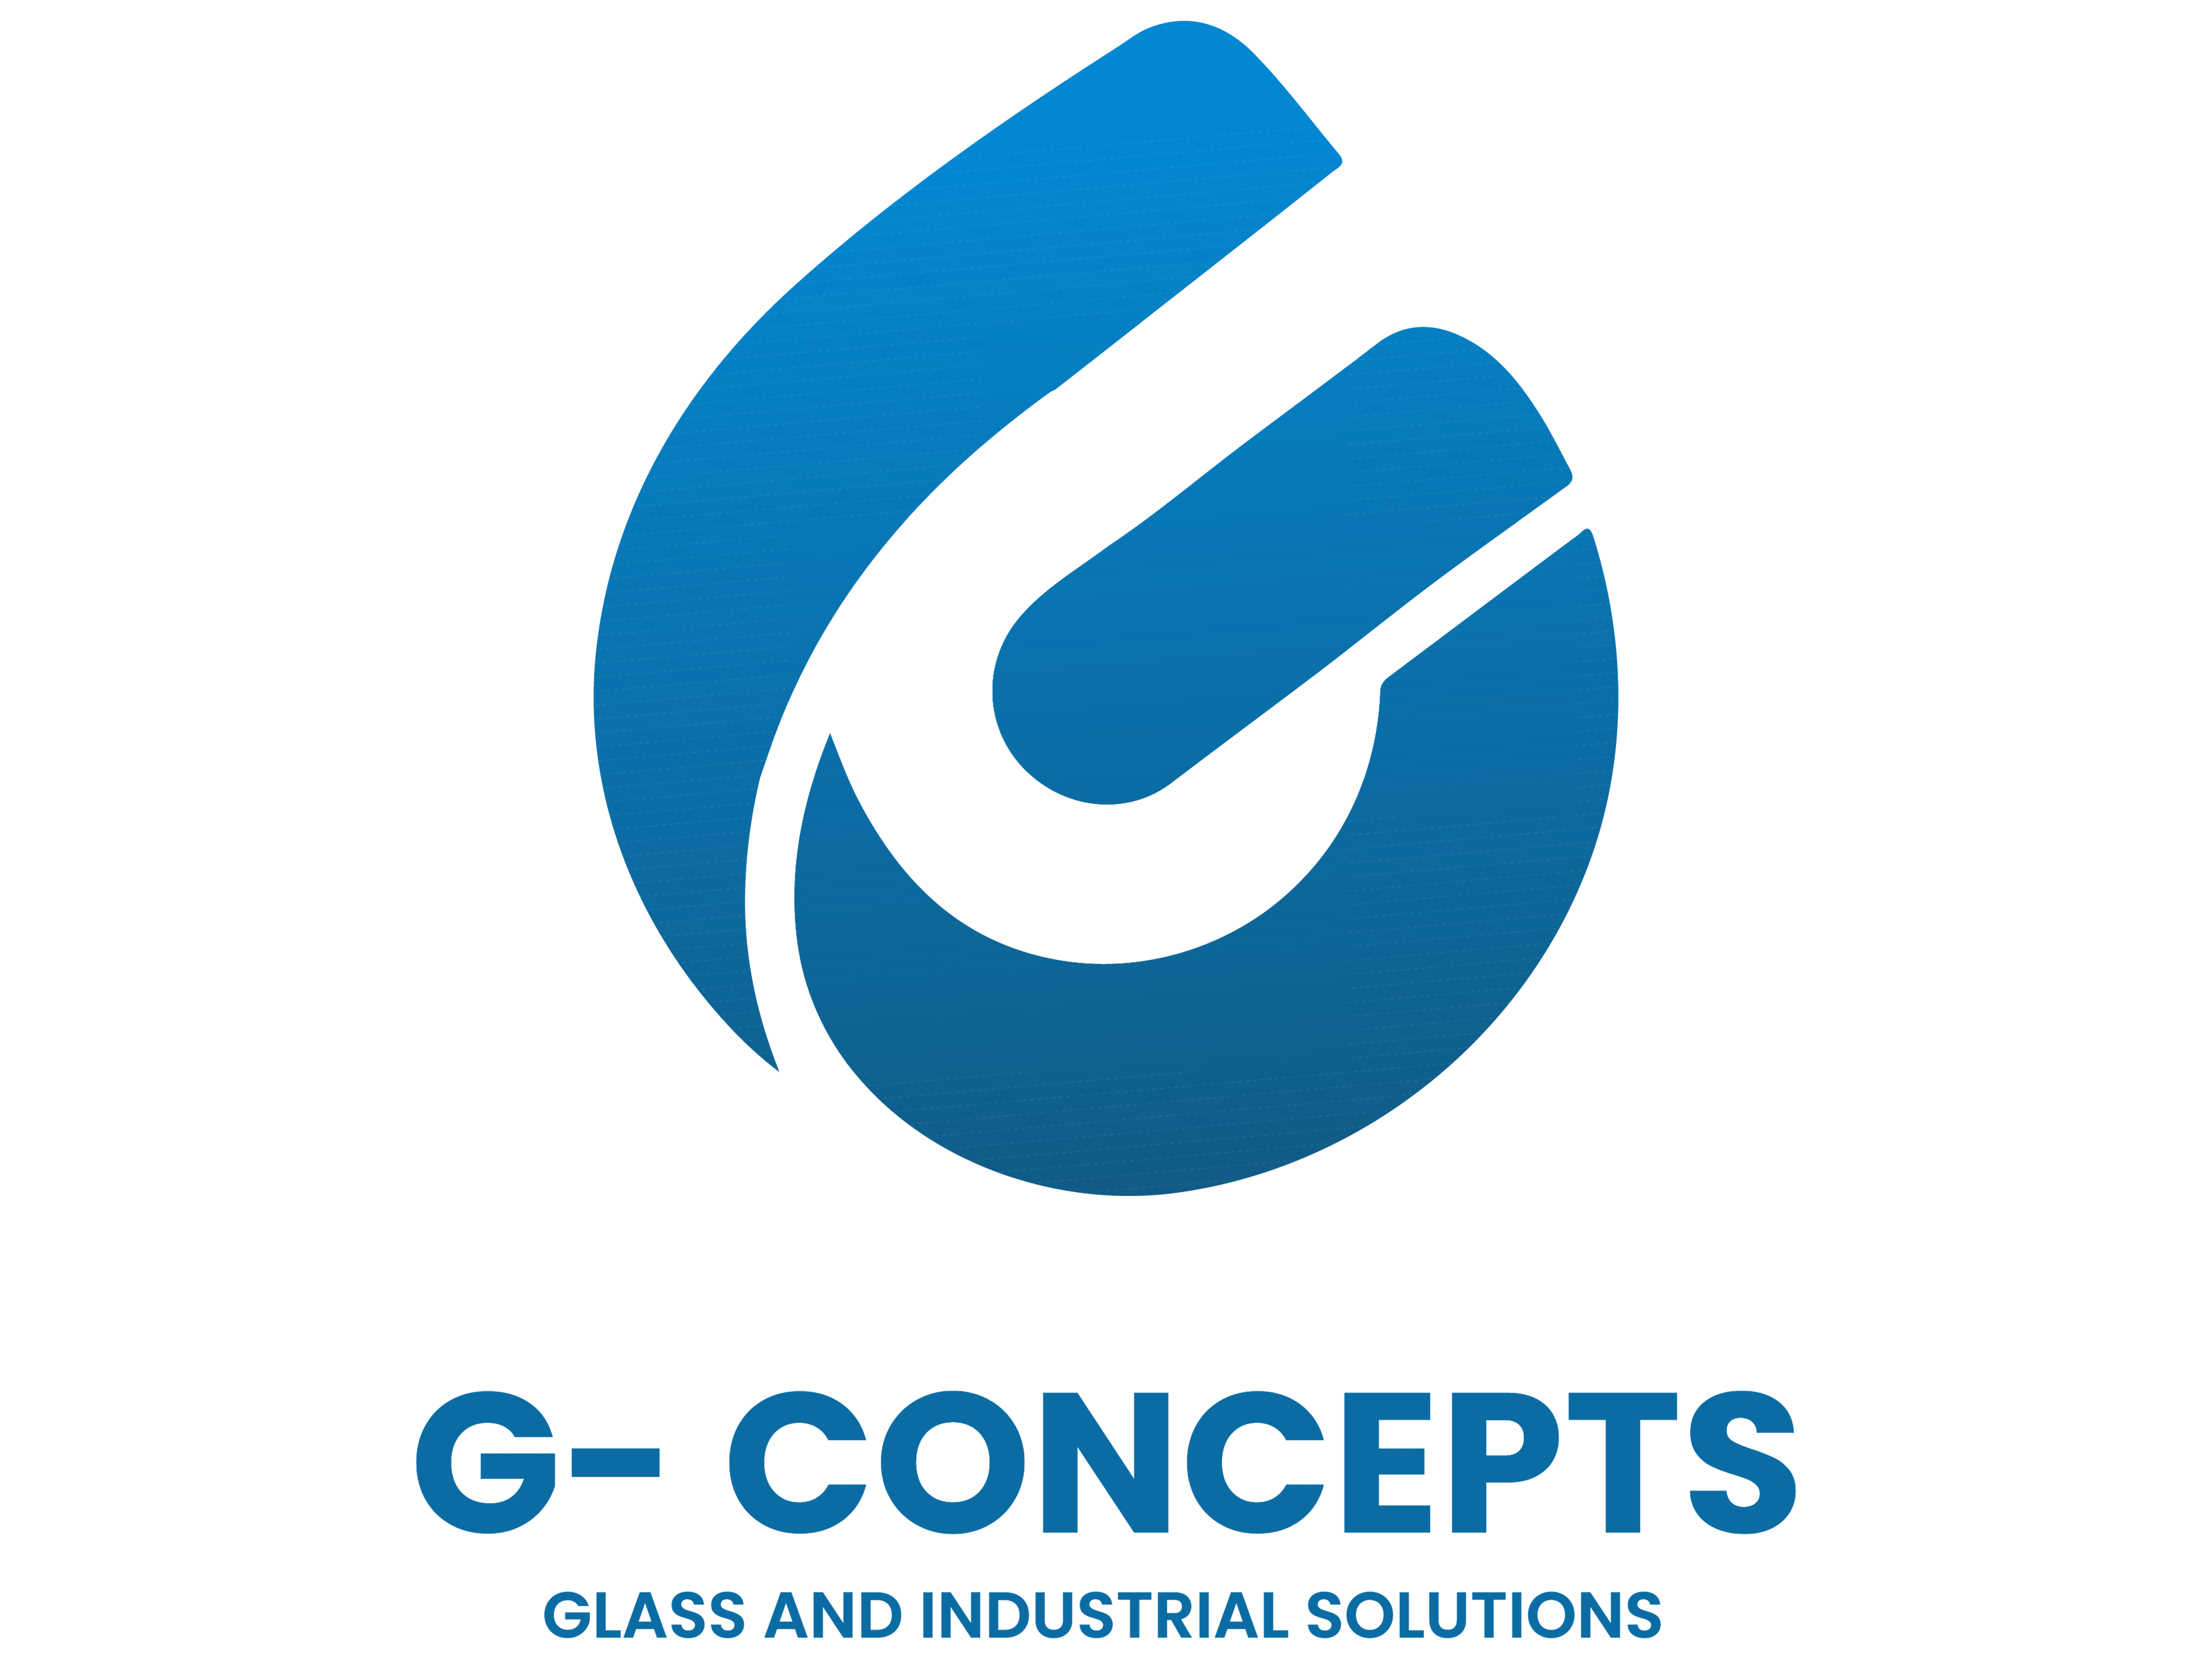 G Concepts|Legal Services|Professional Services